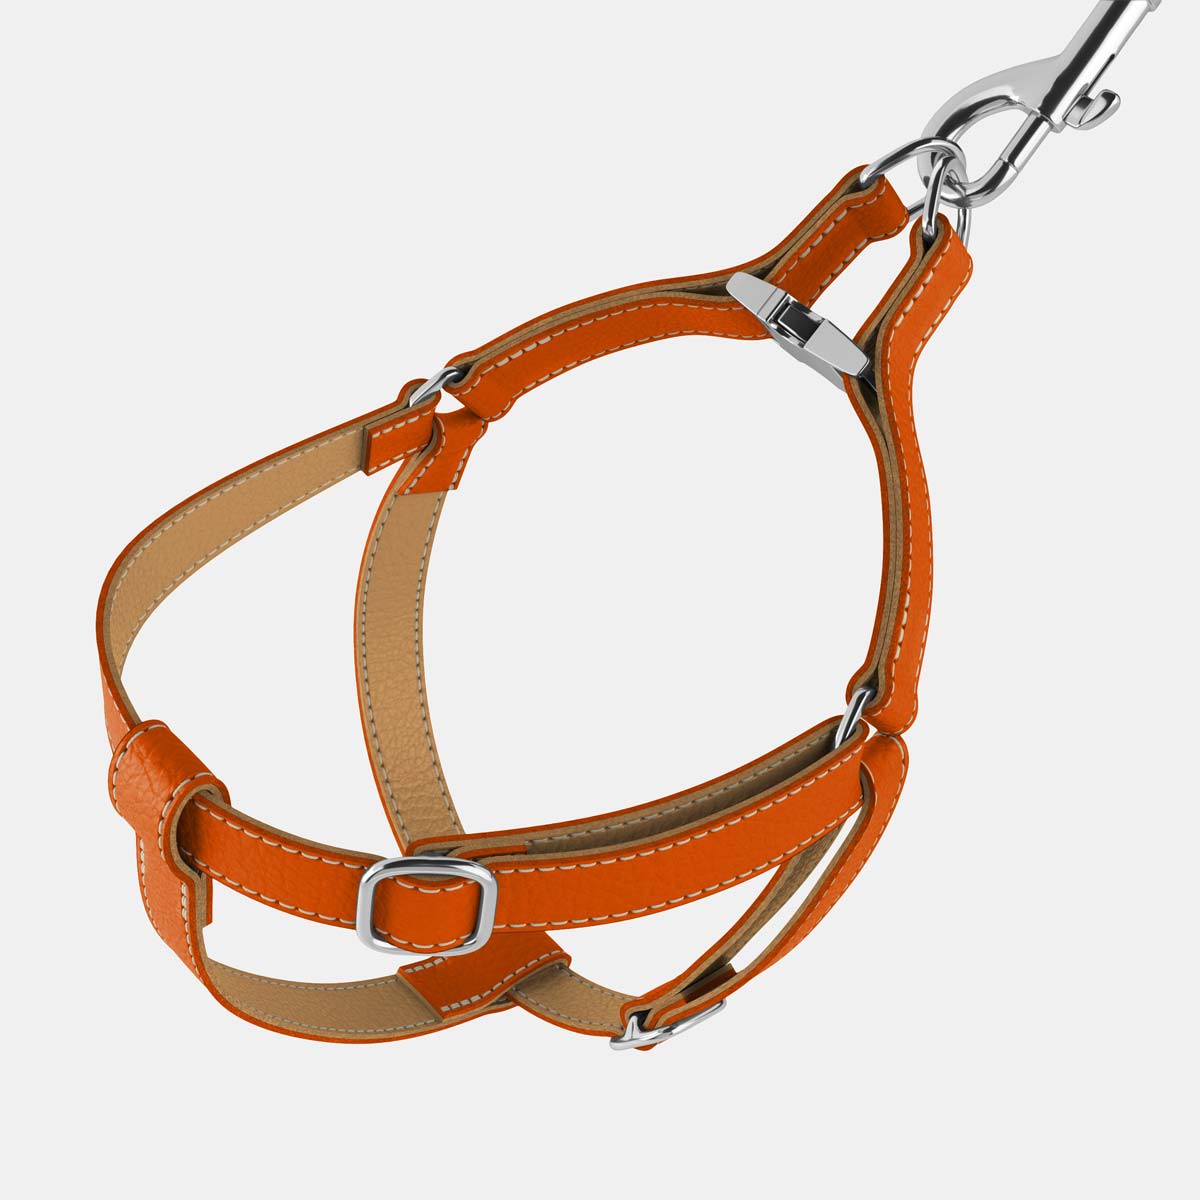 Leather Dog Harness - Orange and Beige - RYAN London